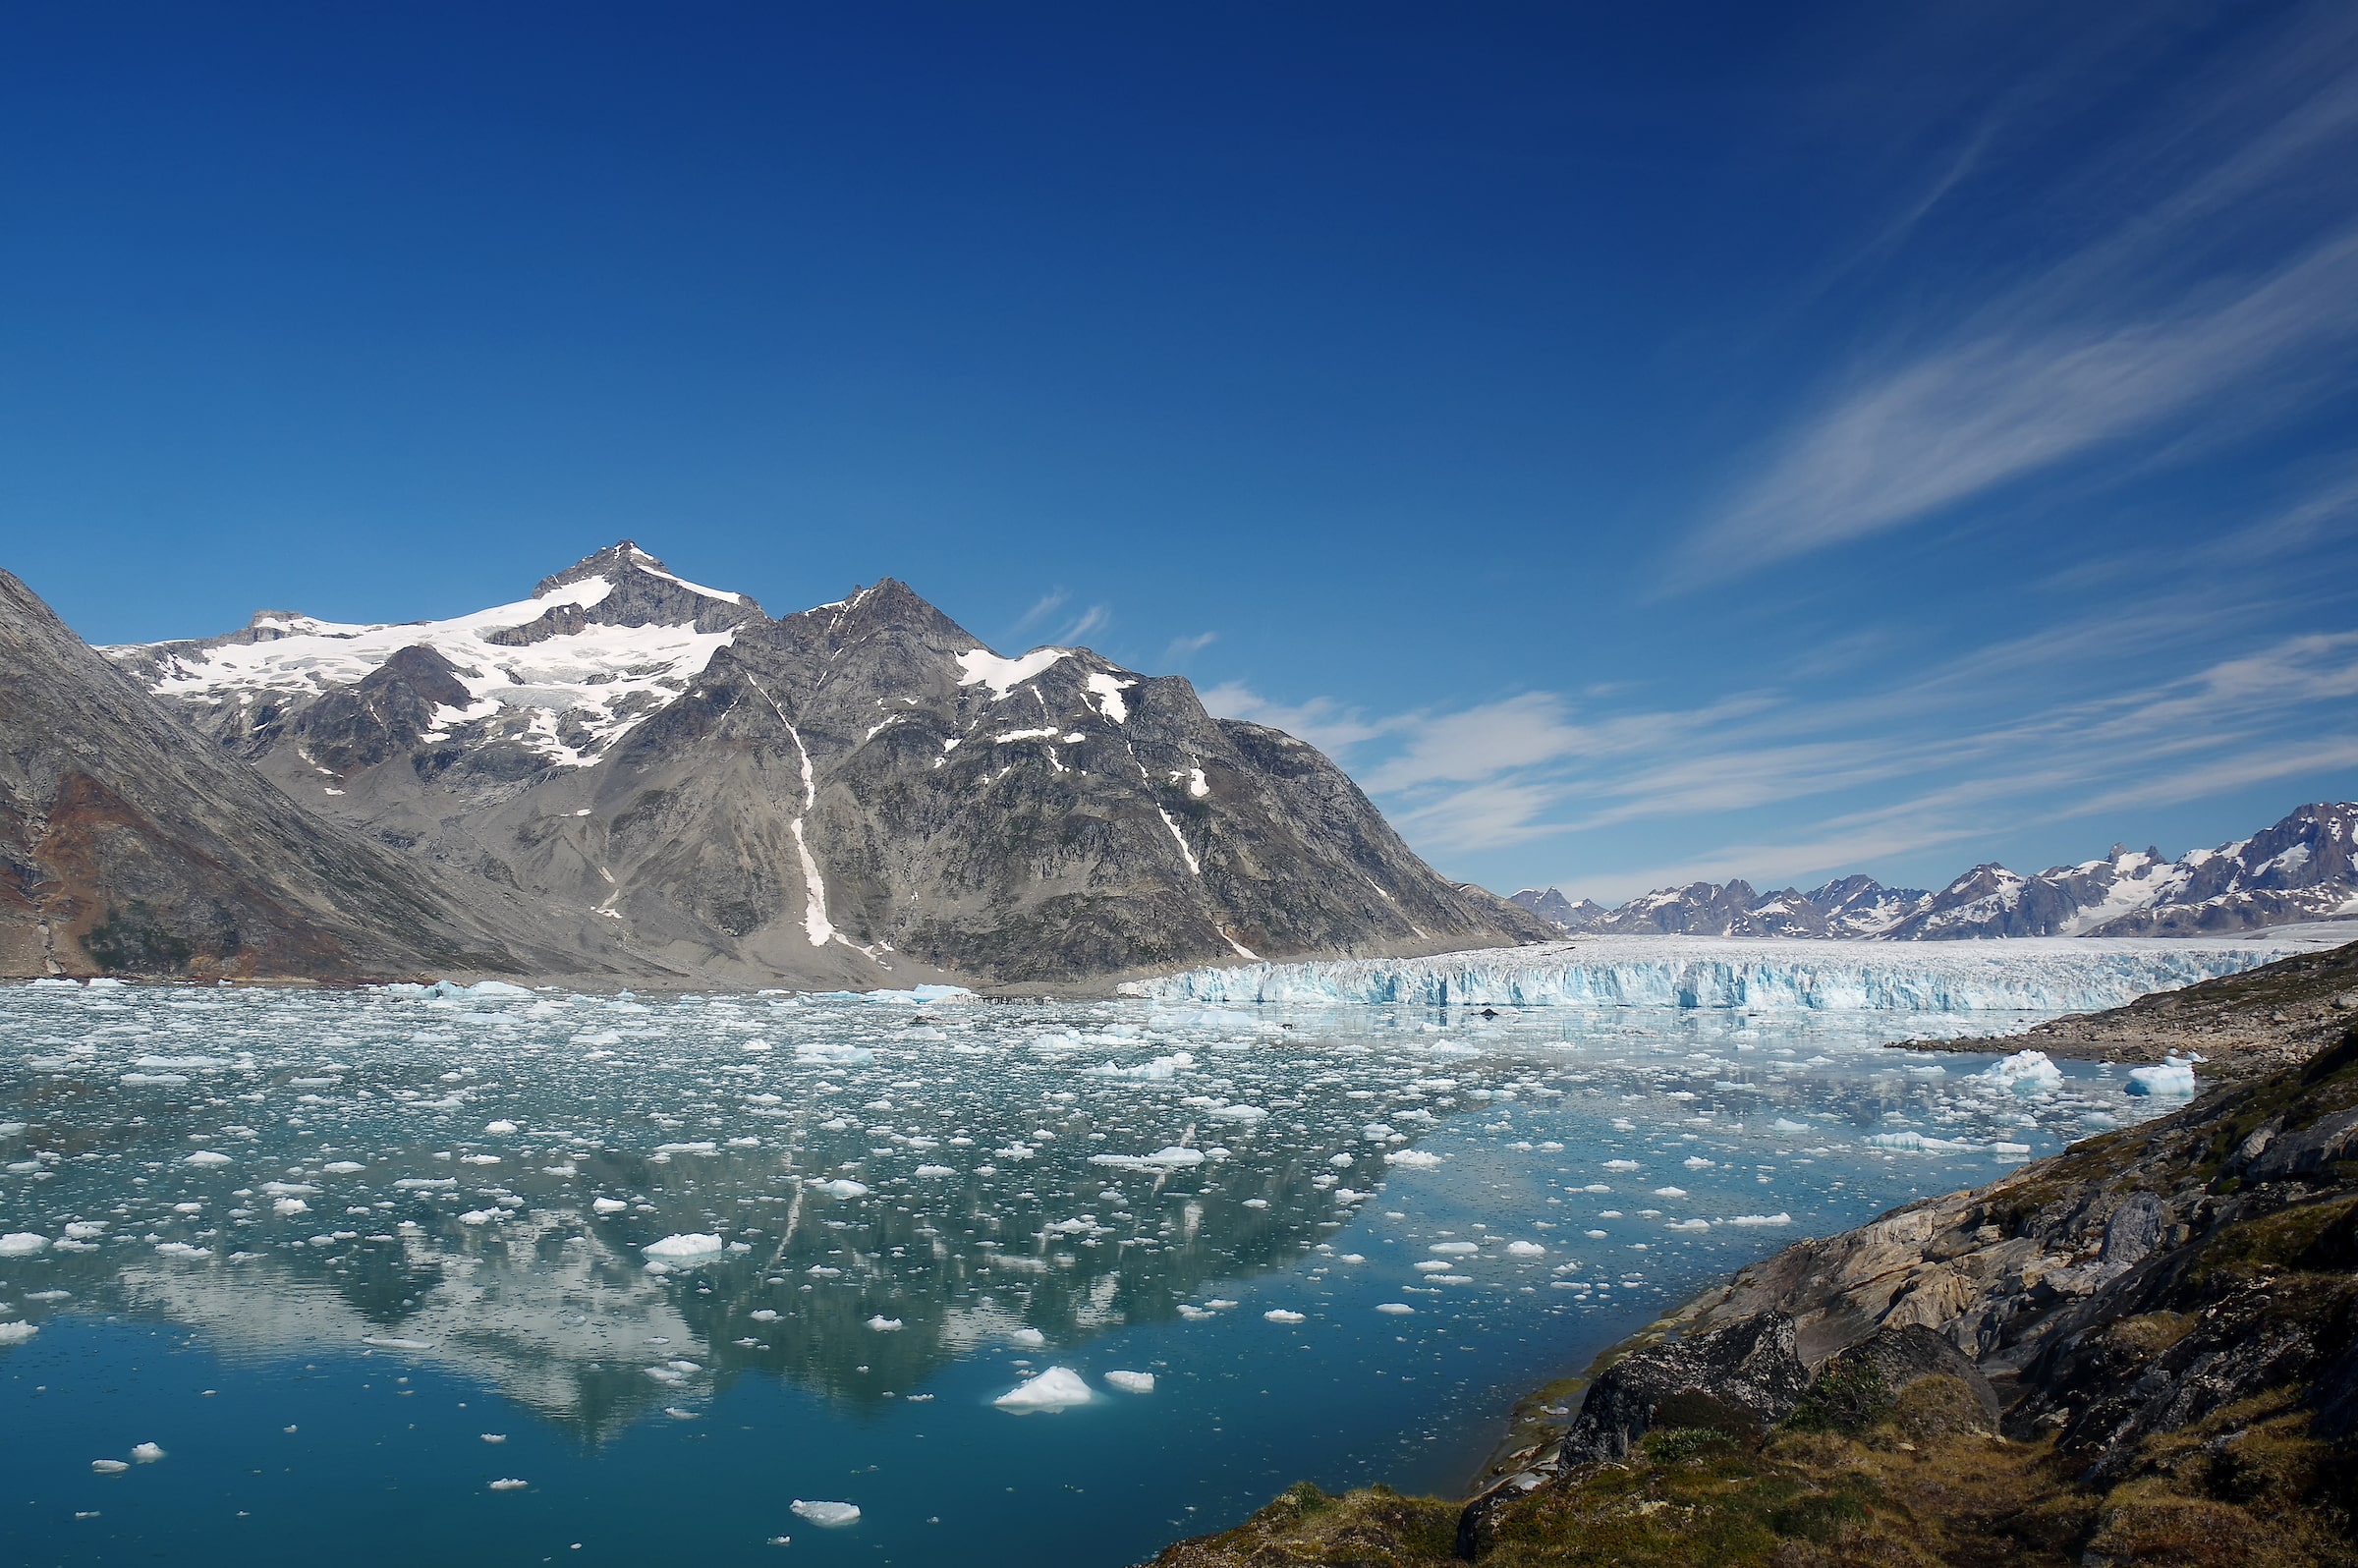 Knud Rasmussen glacier in summer. Photo by Reinhard Pantke - Visit Greenland